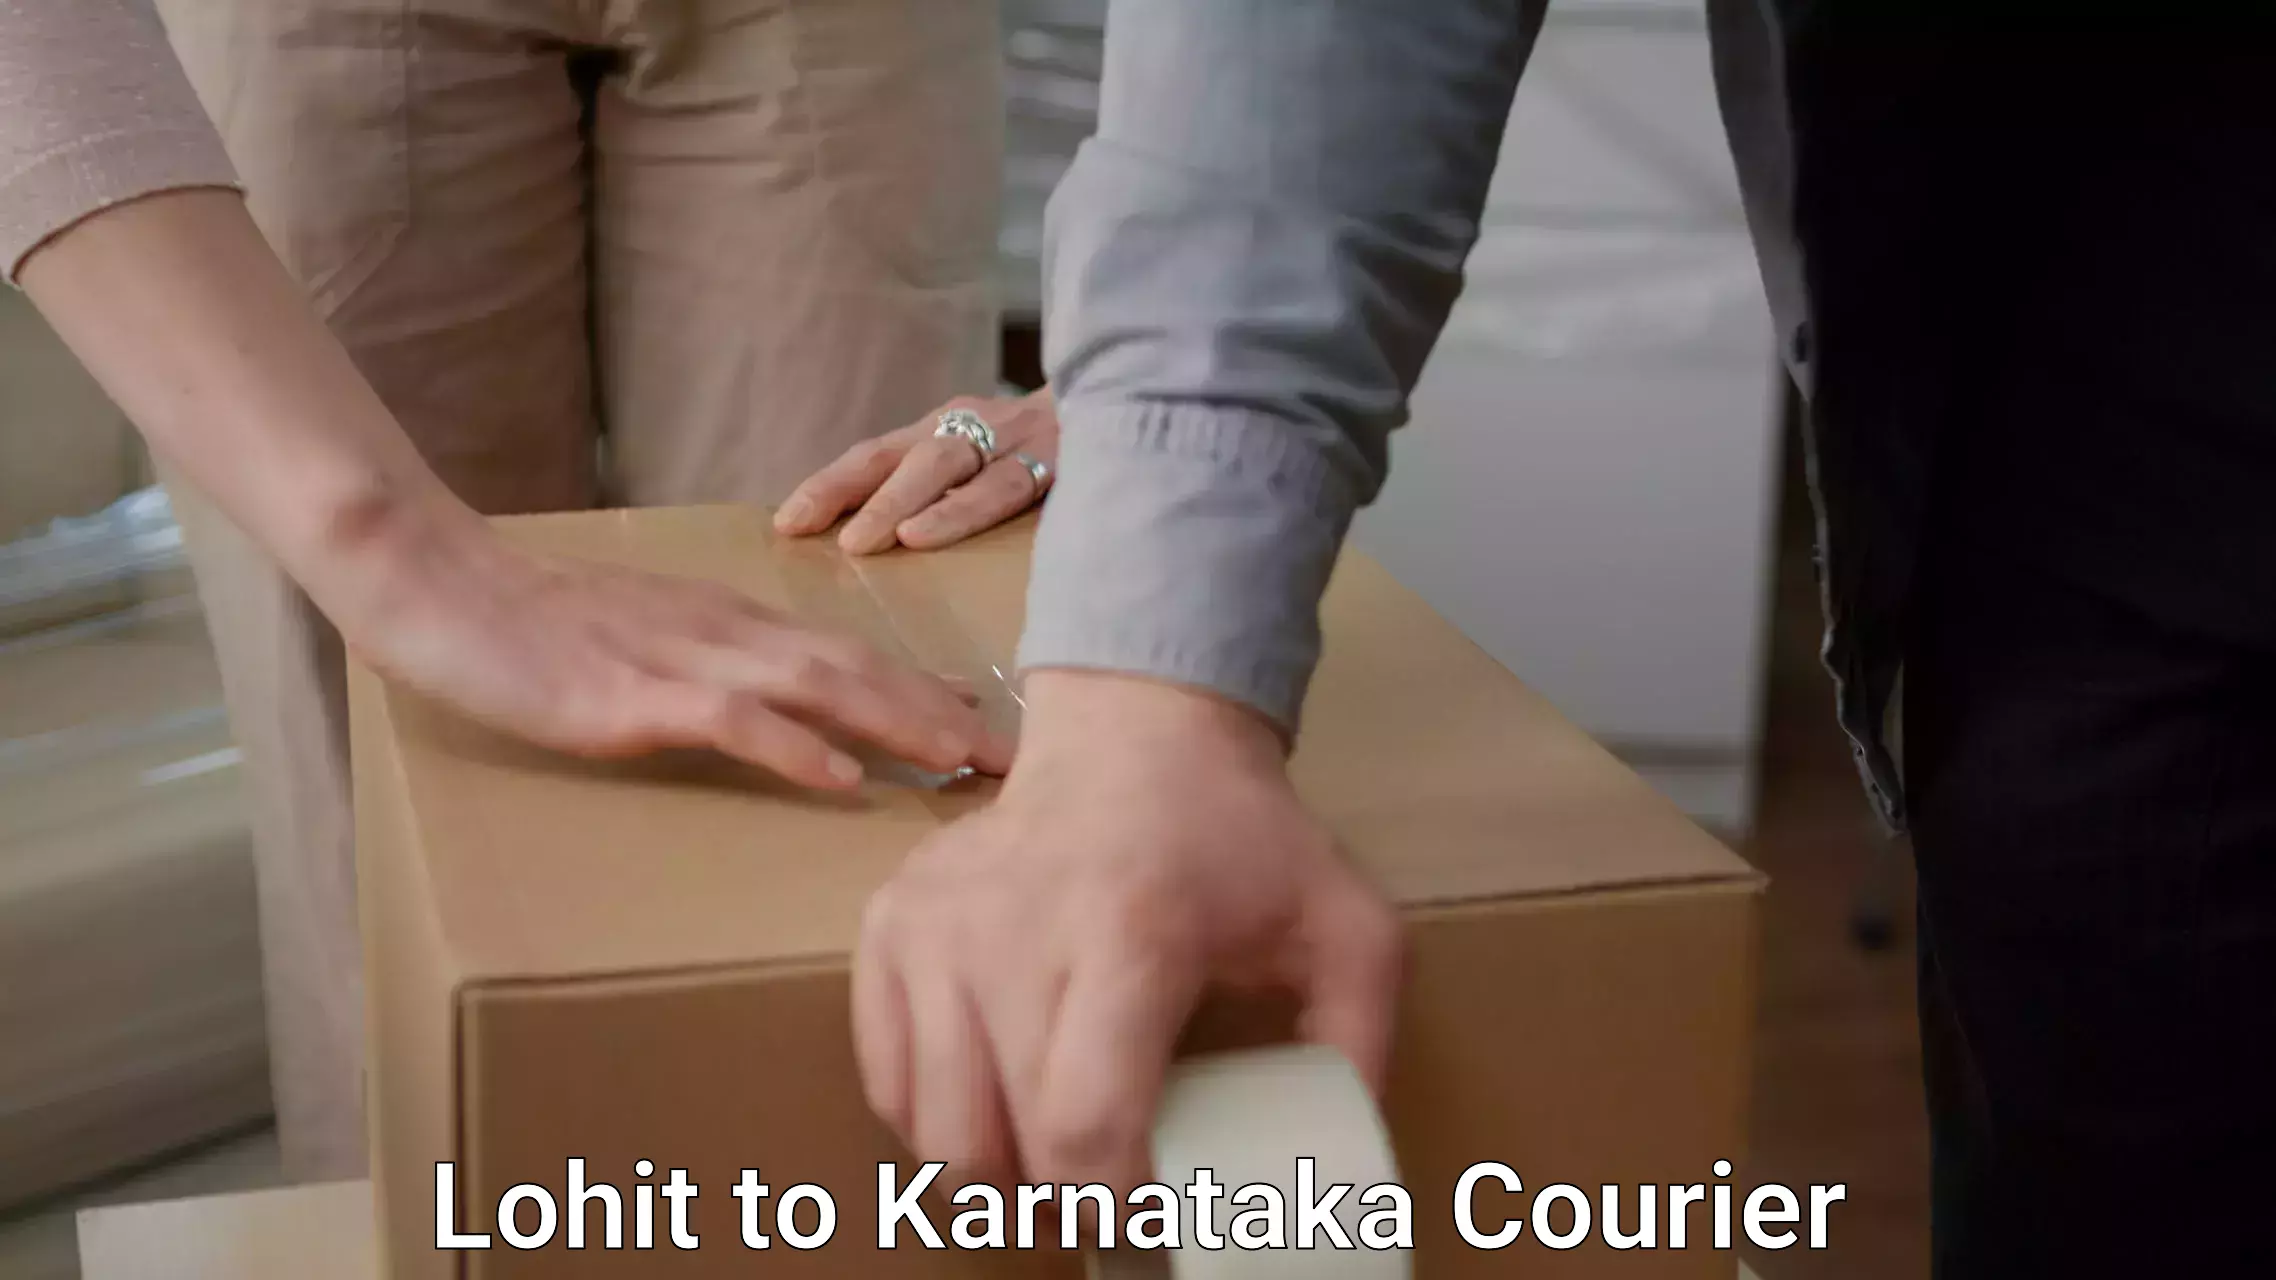 Home moving experts Lohit to Karnataka